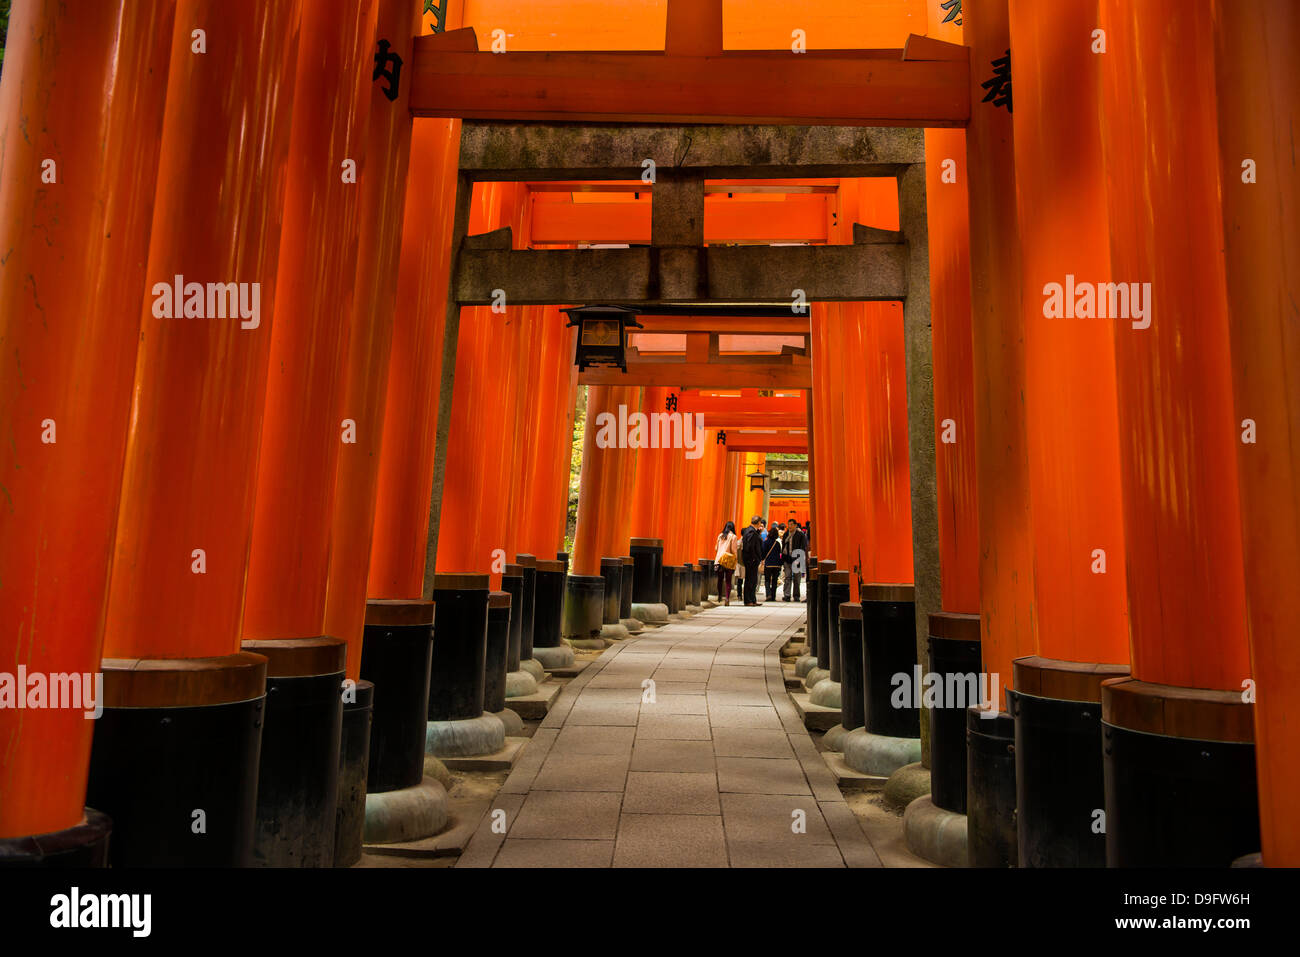 The Endless Red Gates of Kyoto's Fushimi Inari Shrine, Kyoto, Japan Stock Photo